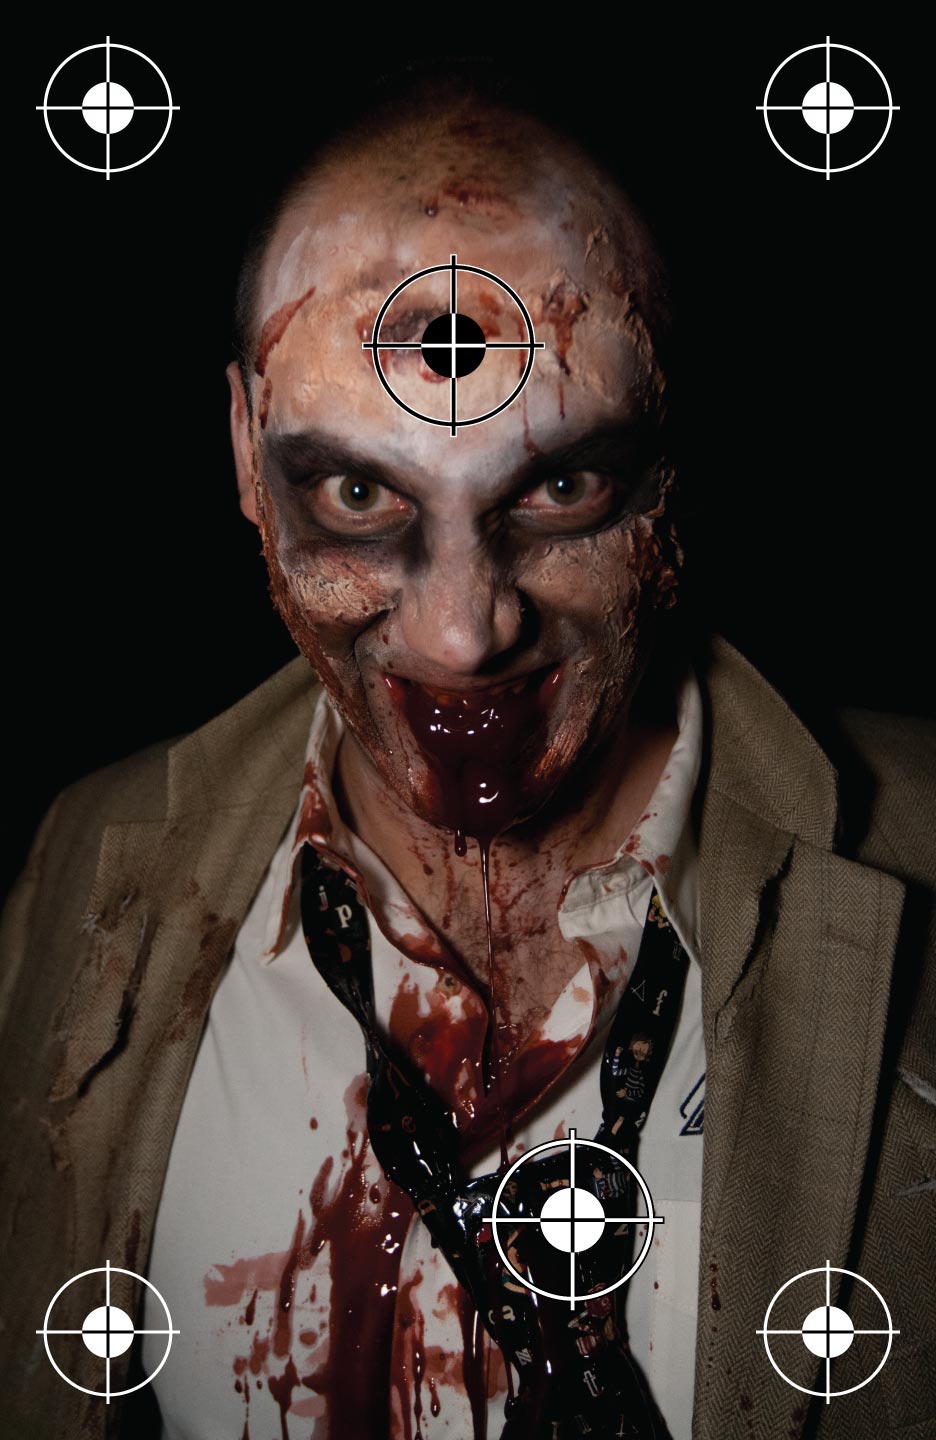 Realistic Zombie Shooting Target at PhotosAndFun.com